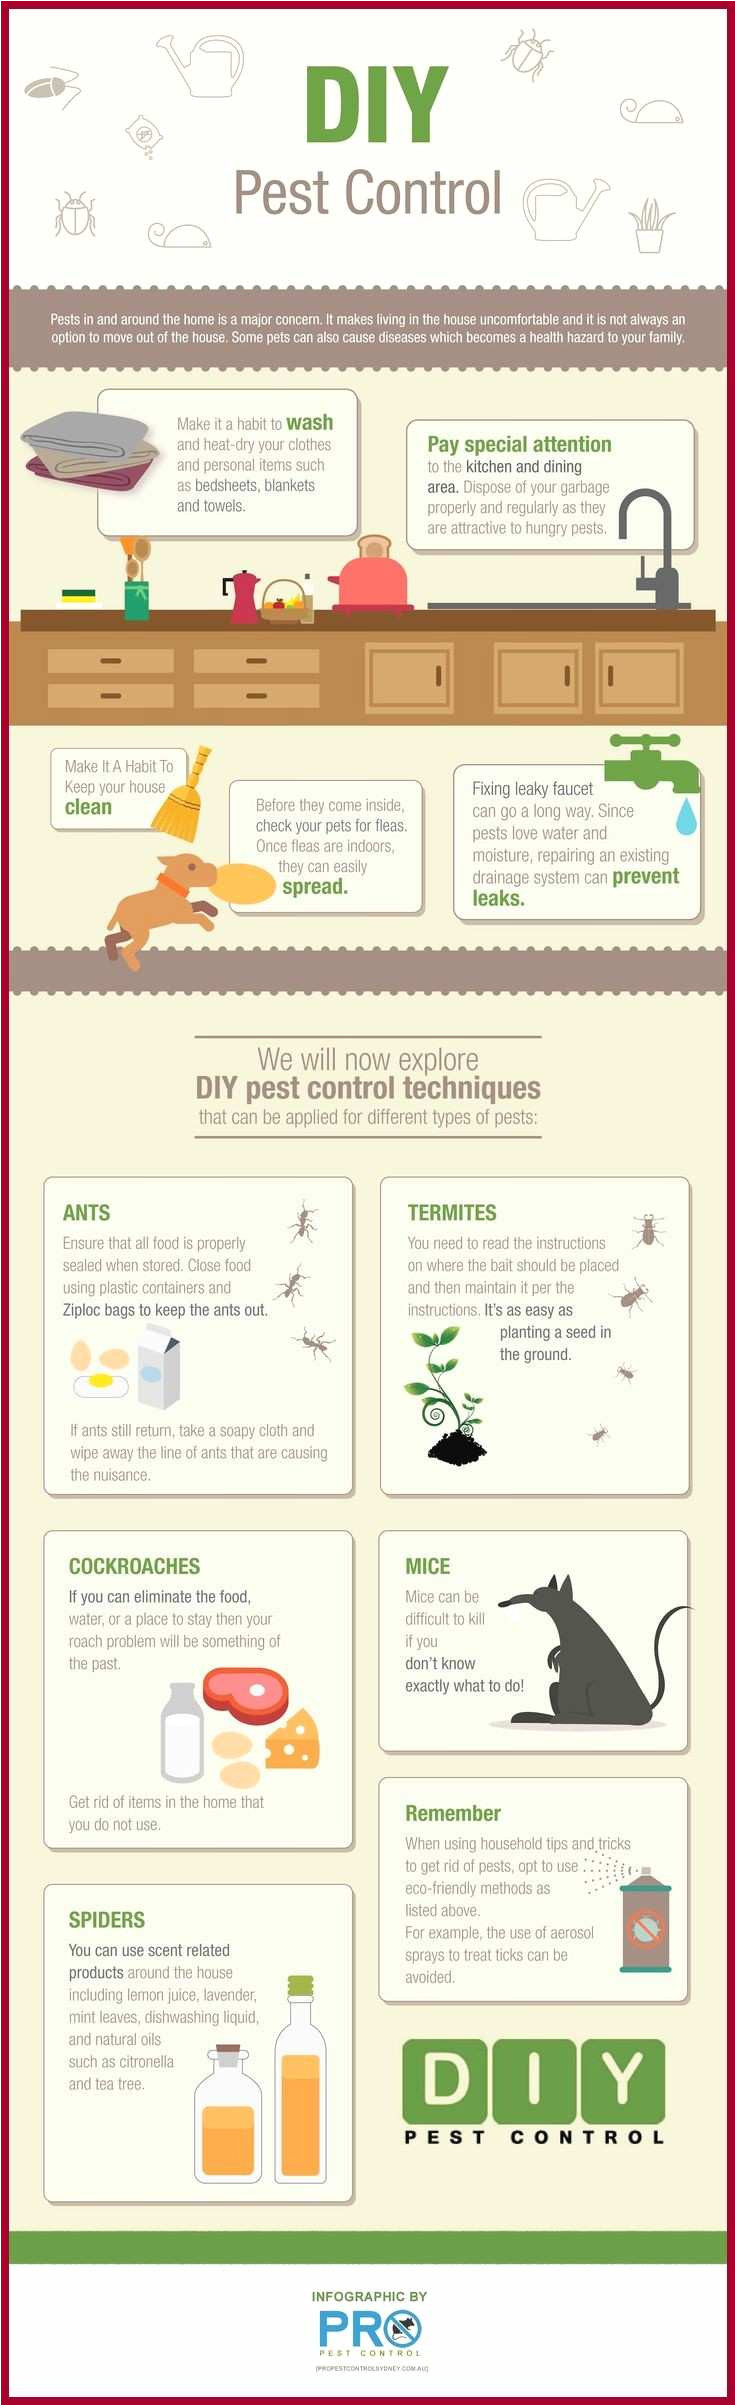 pest control business for sale nj best of 48 best mercial pest control images on pinterest